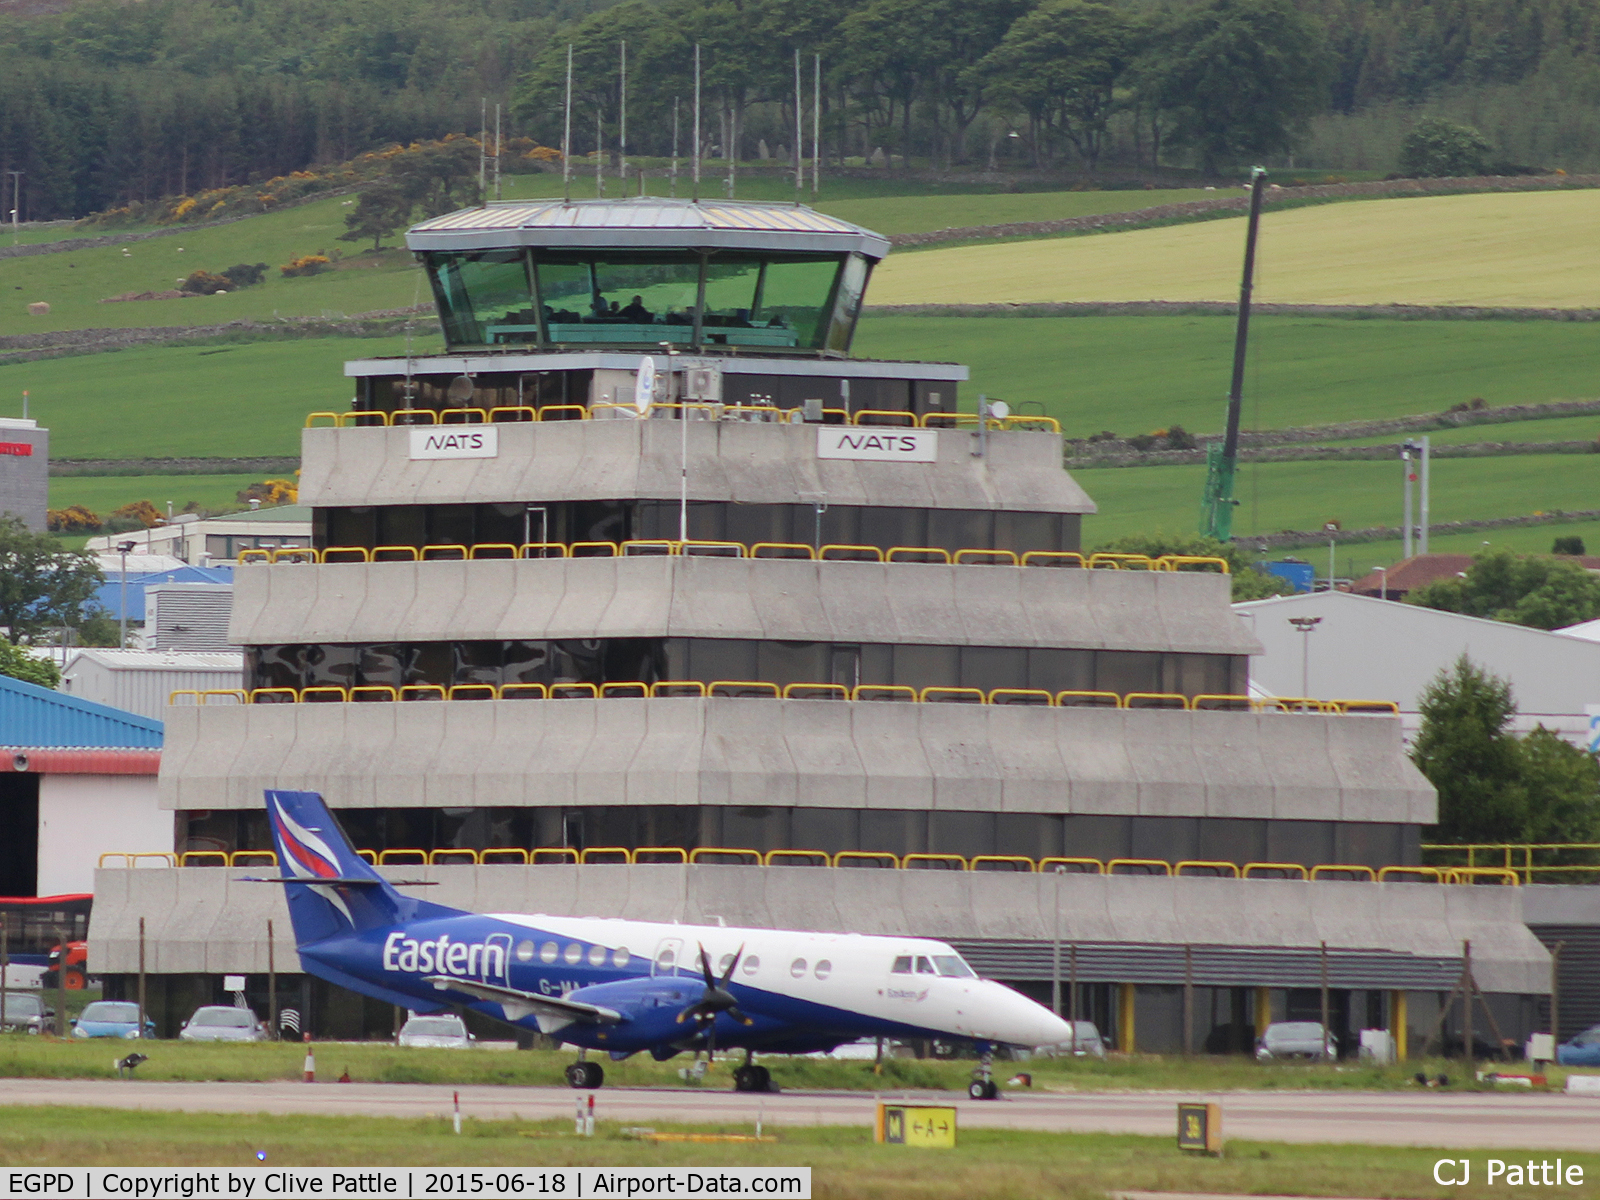 Aberdeen Airport, Aberdeen, Scotland United Kingdom (EGPD) - The distinctive 'Wedding Cake' ATC tower at Aberdeen, Scotland EGPD